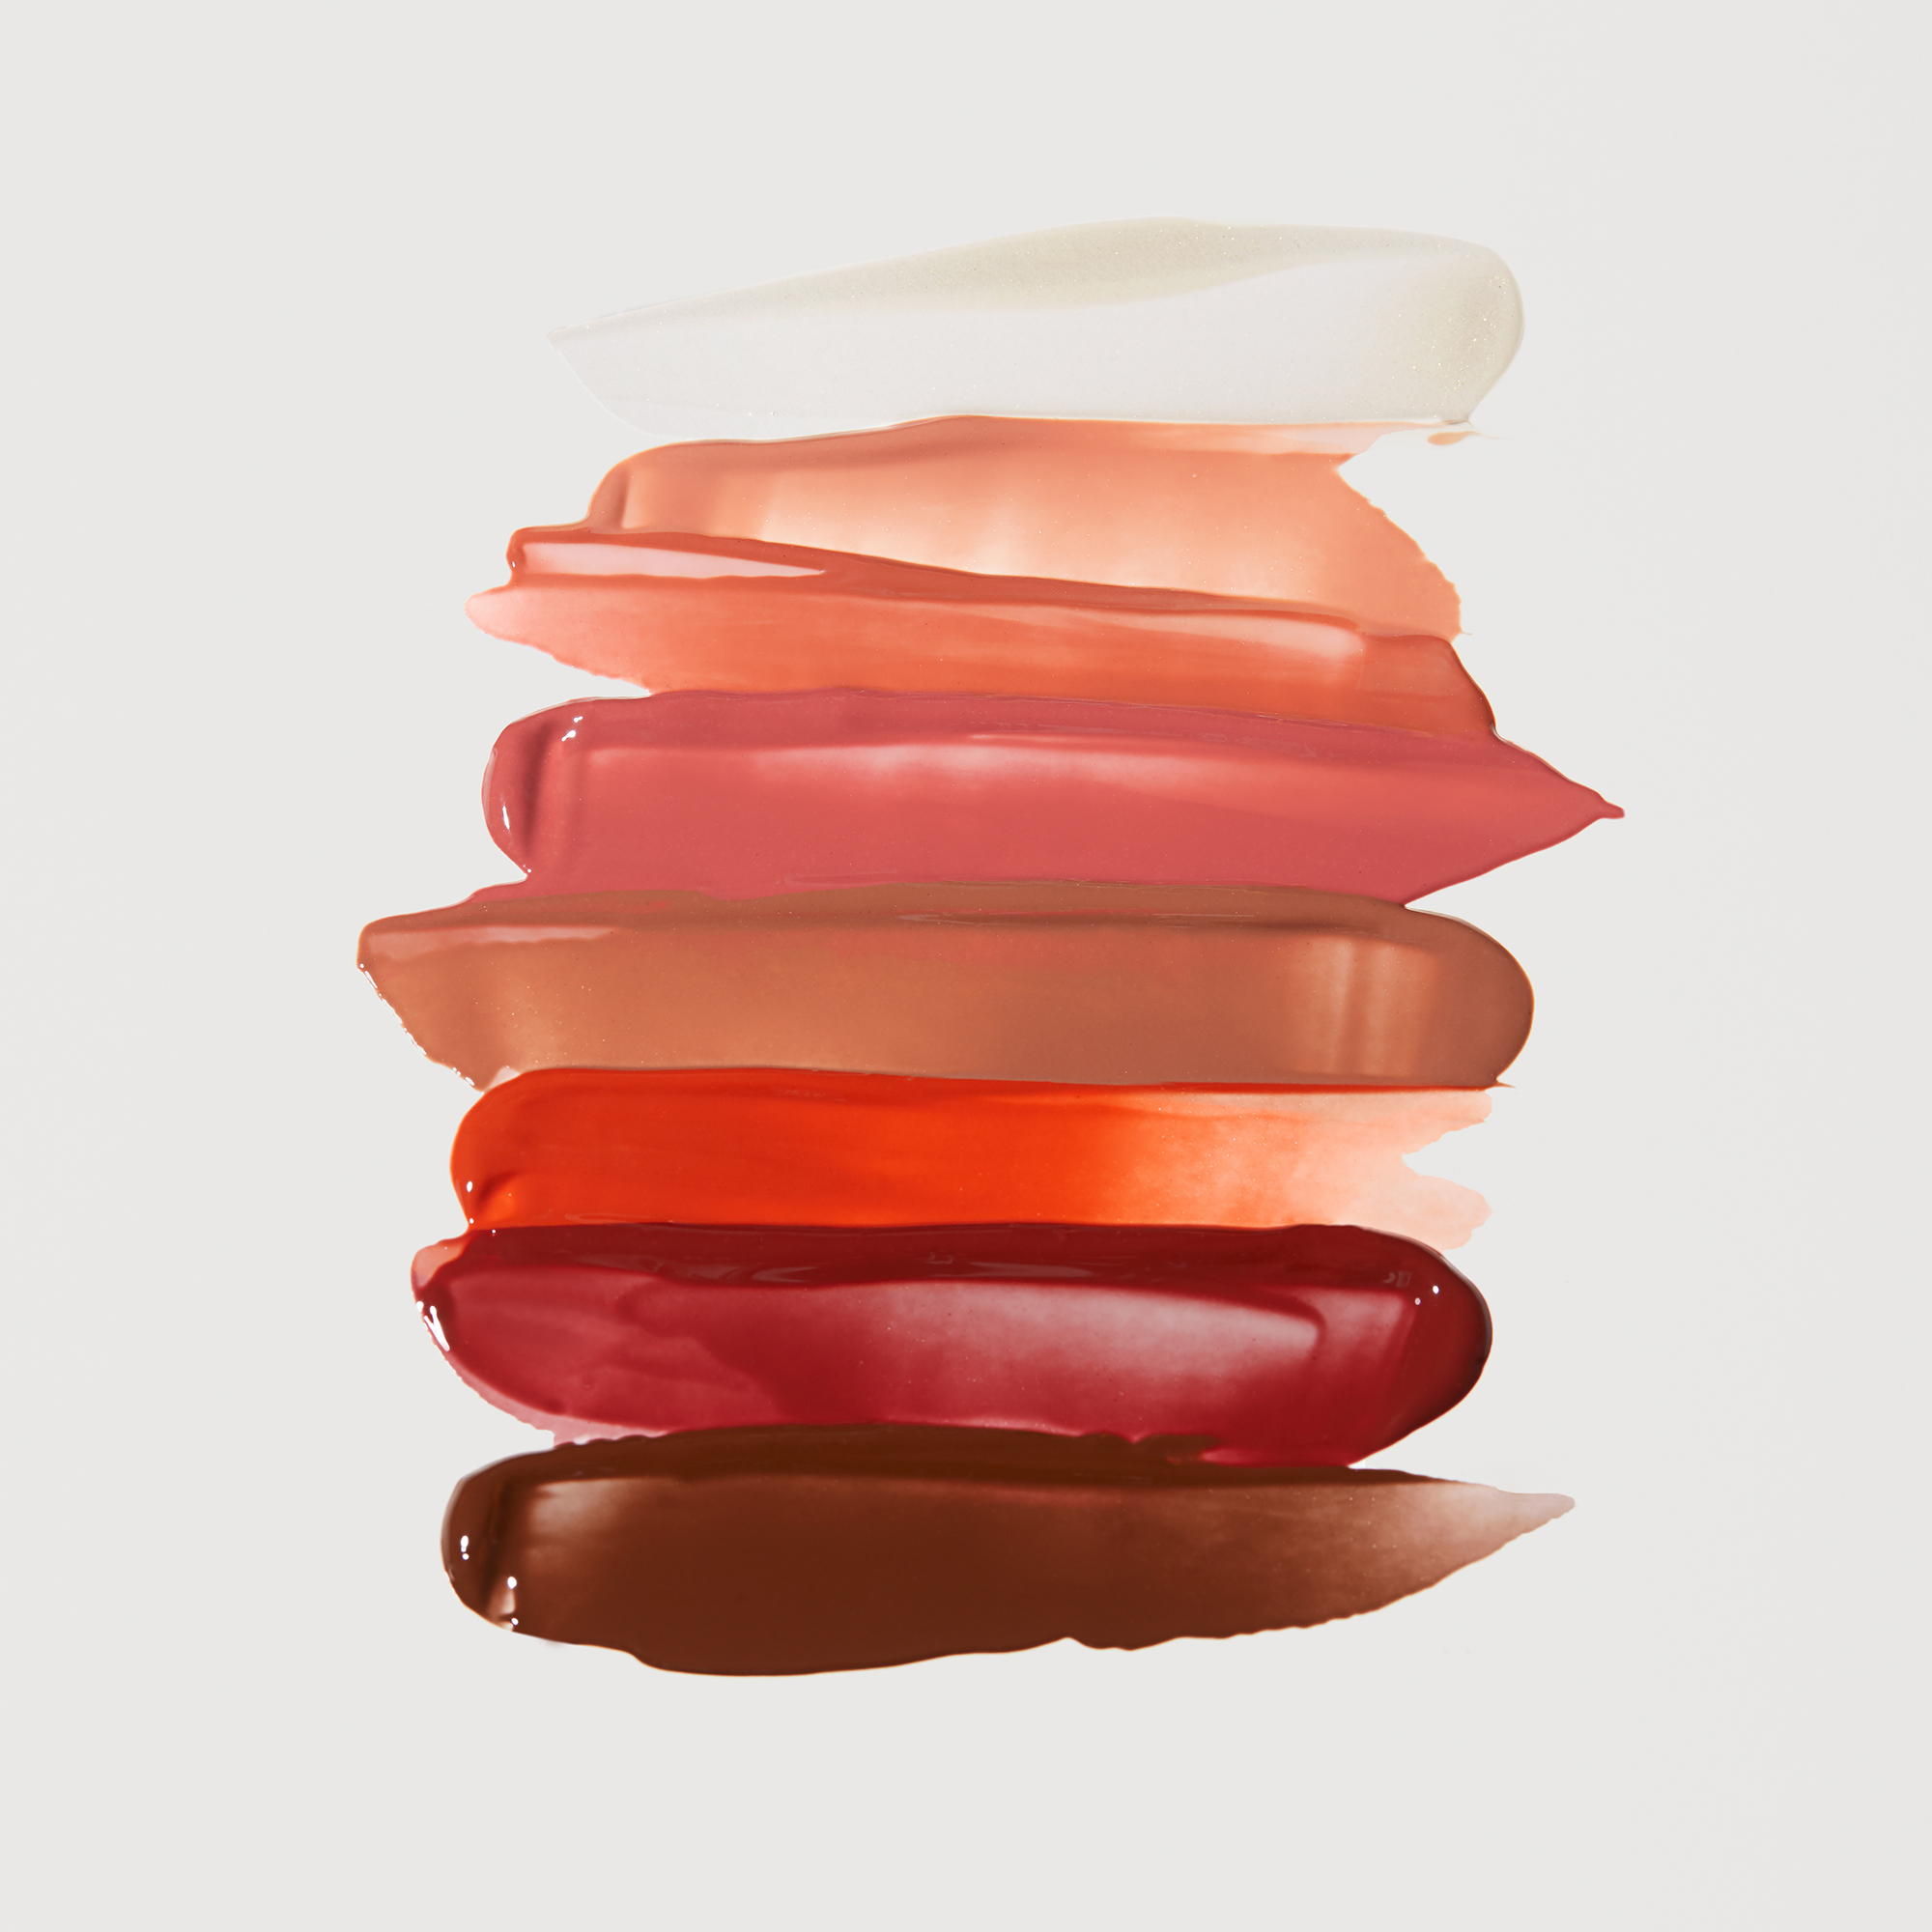 Lipstick shades by MERIT